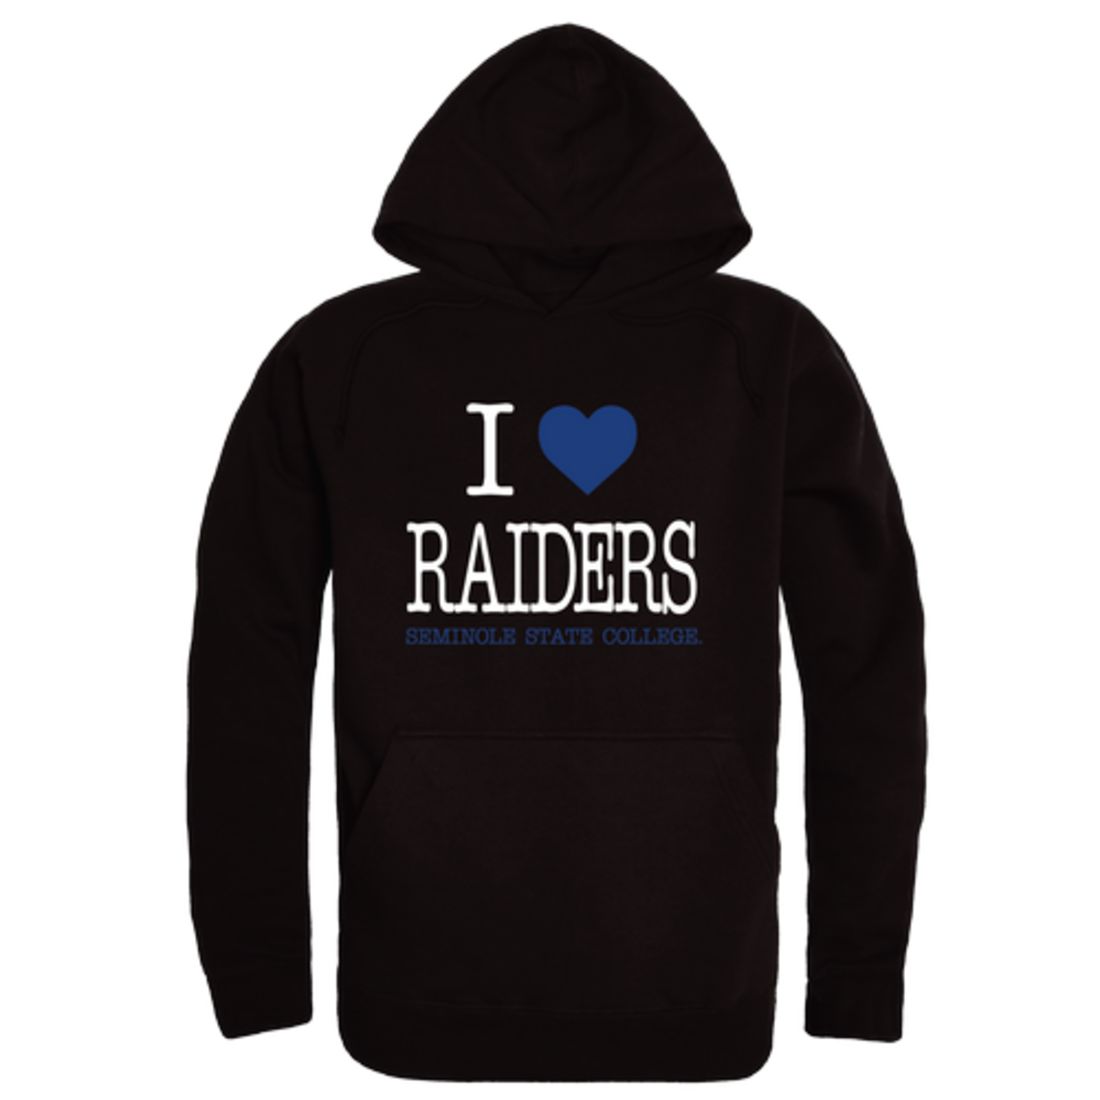 I-Love-Seminole-State-College-Raiders-Fleece-Hoodie-Sweatshirts